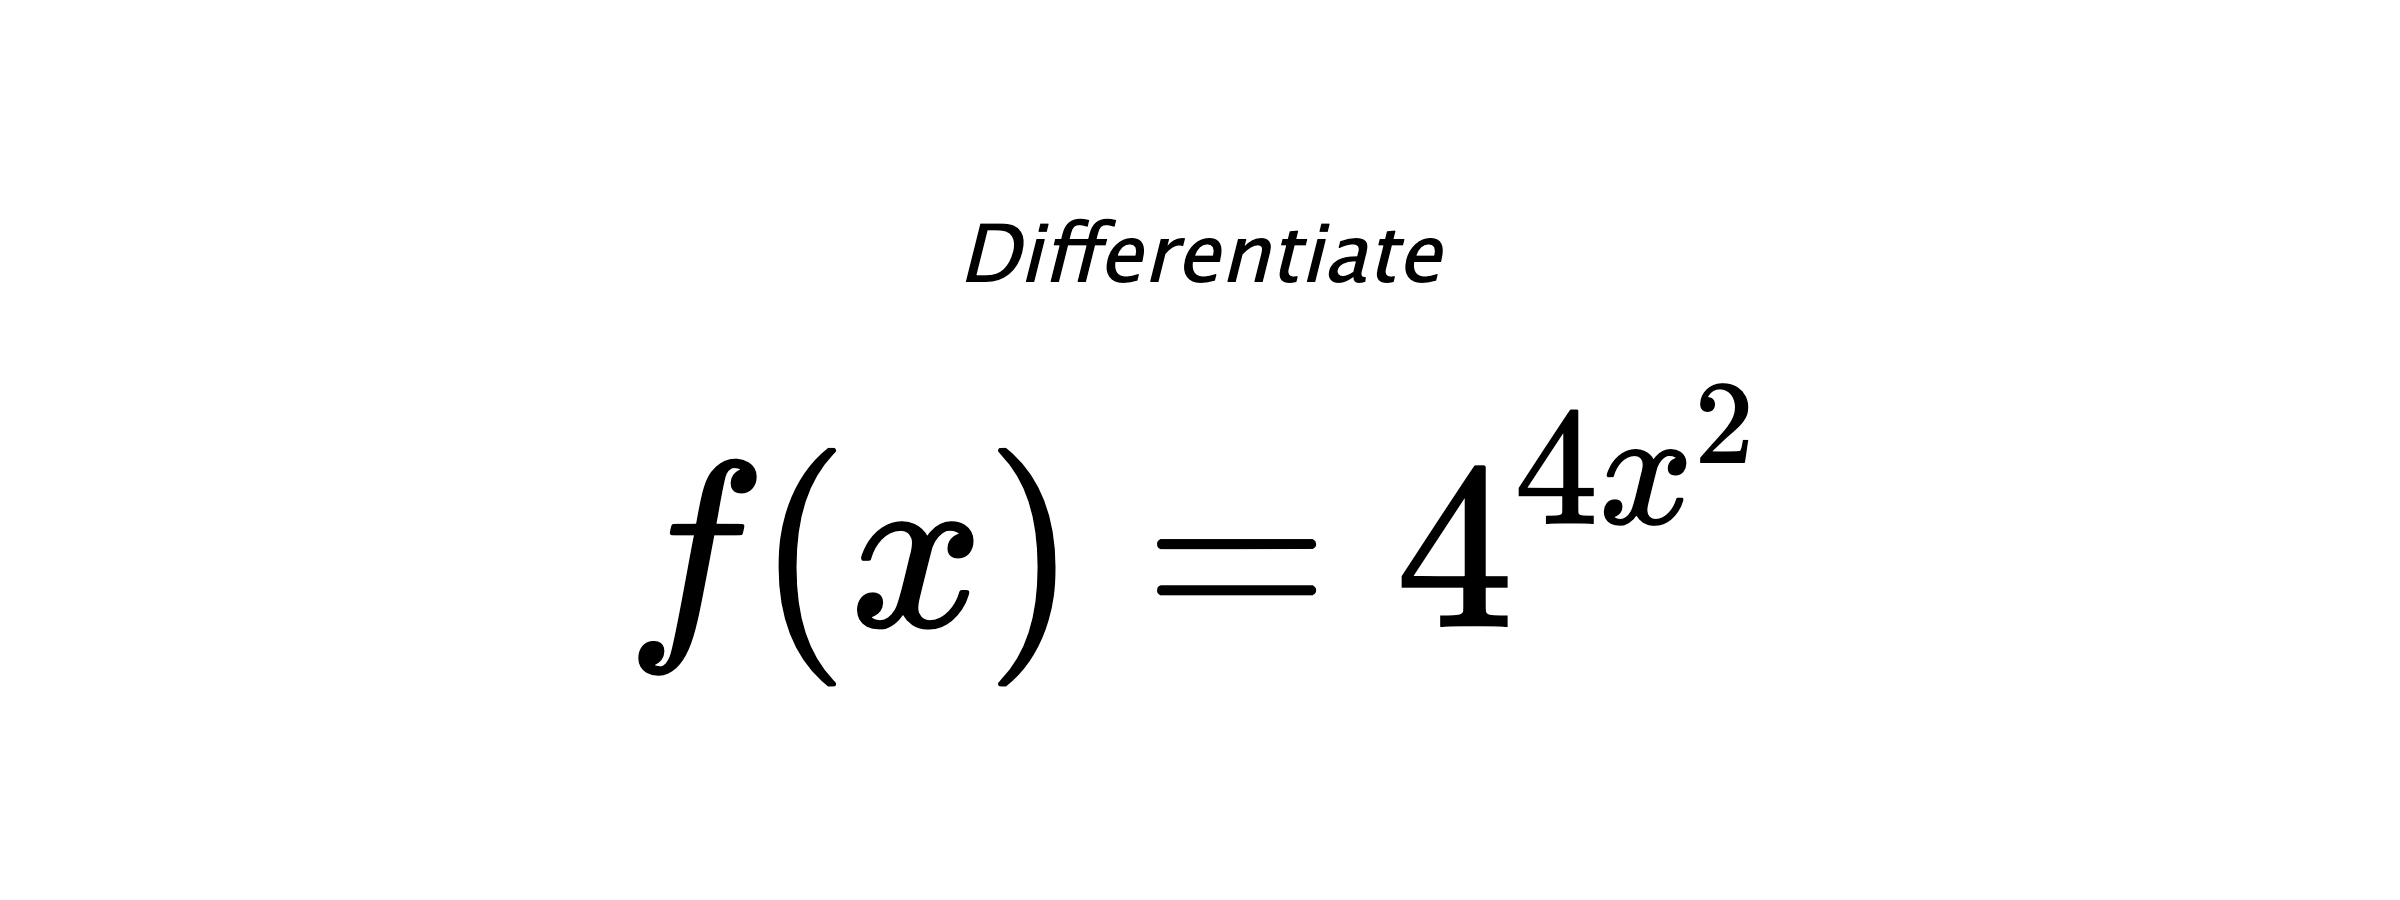 Differentiate $ f(x) = 4^{4 x^{2}} $